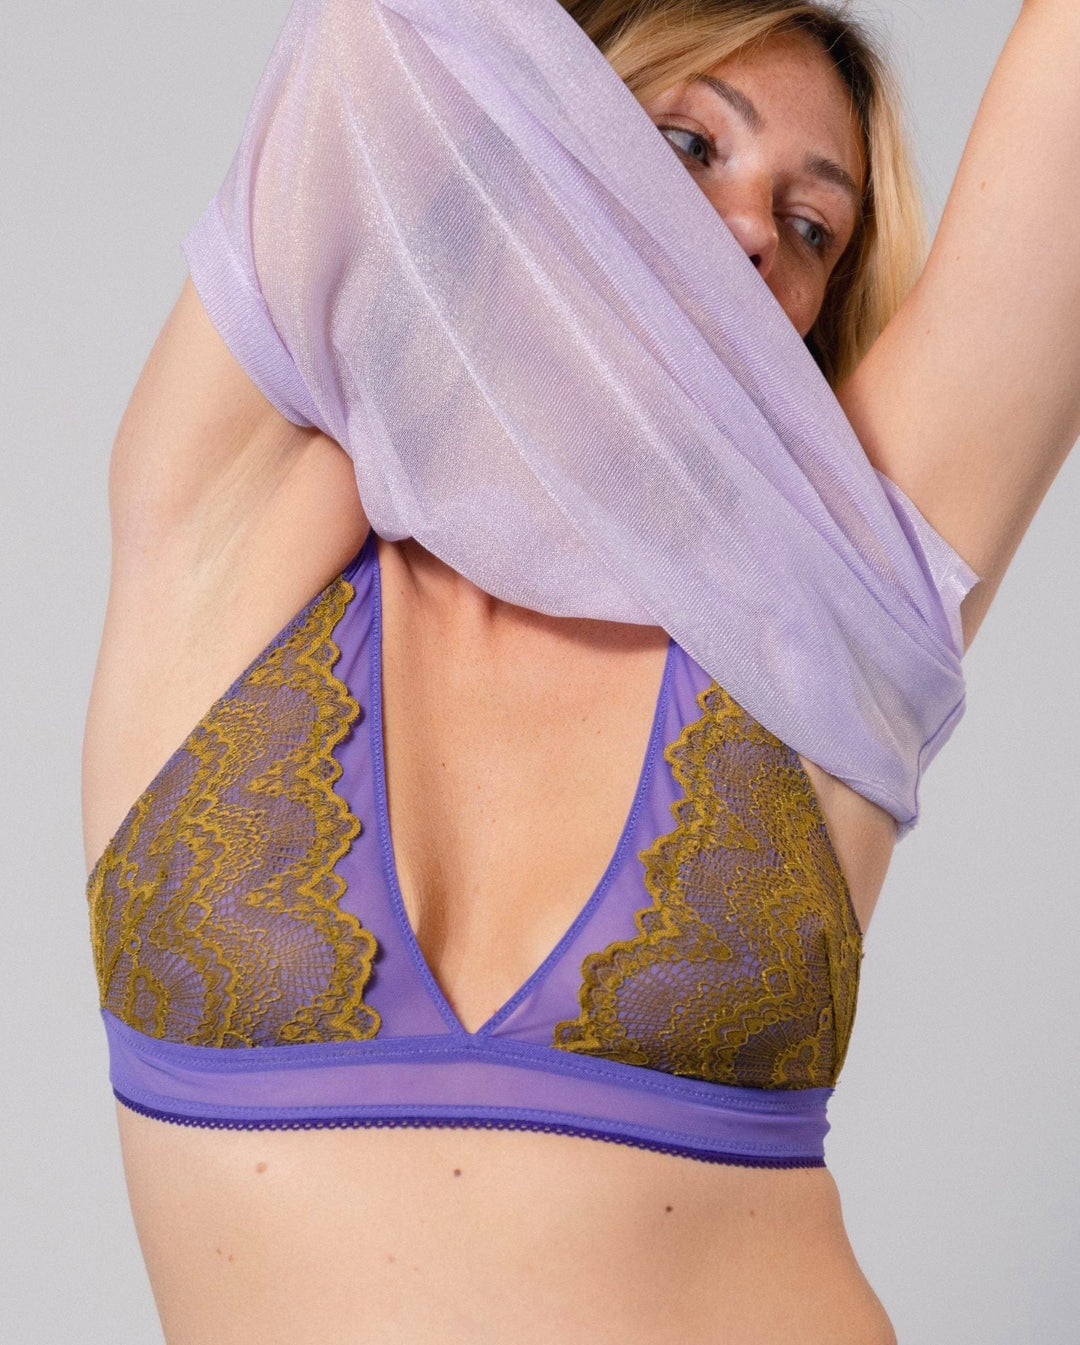 Wholesale designer lingerie australia For An Irresistible Look 